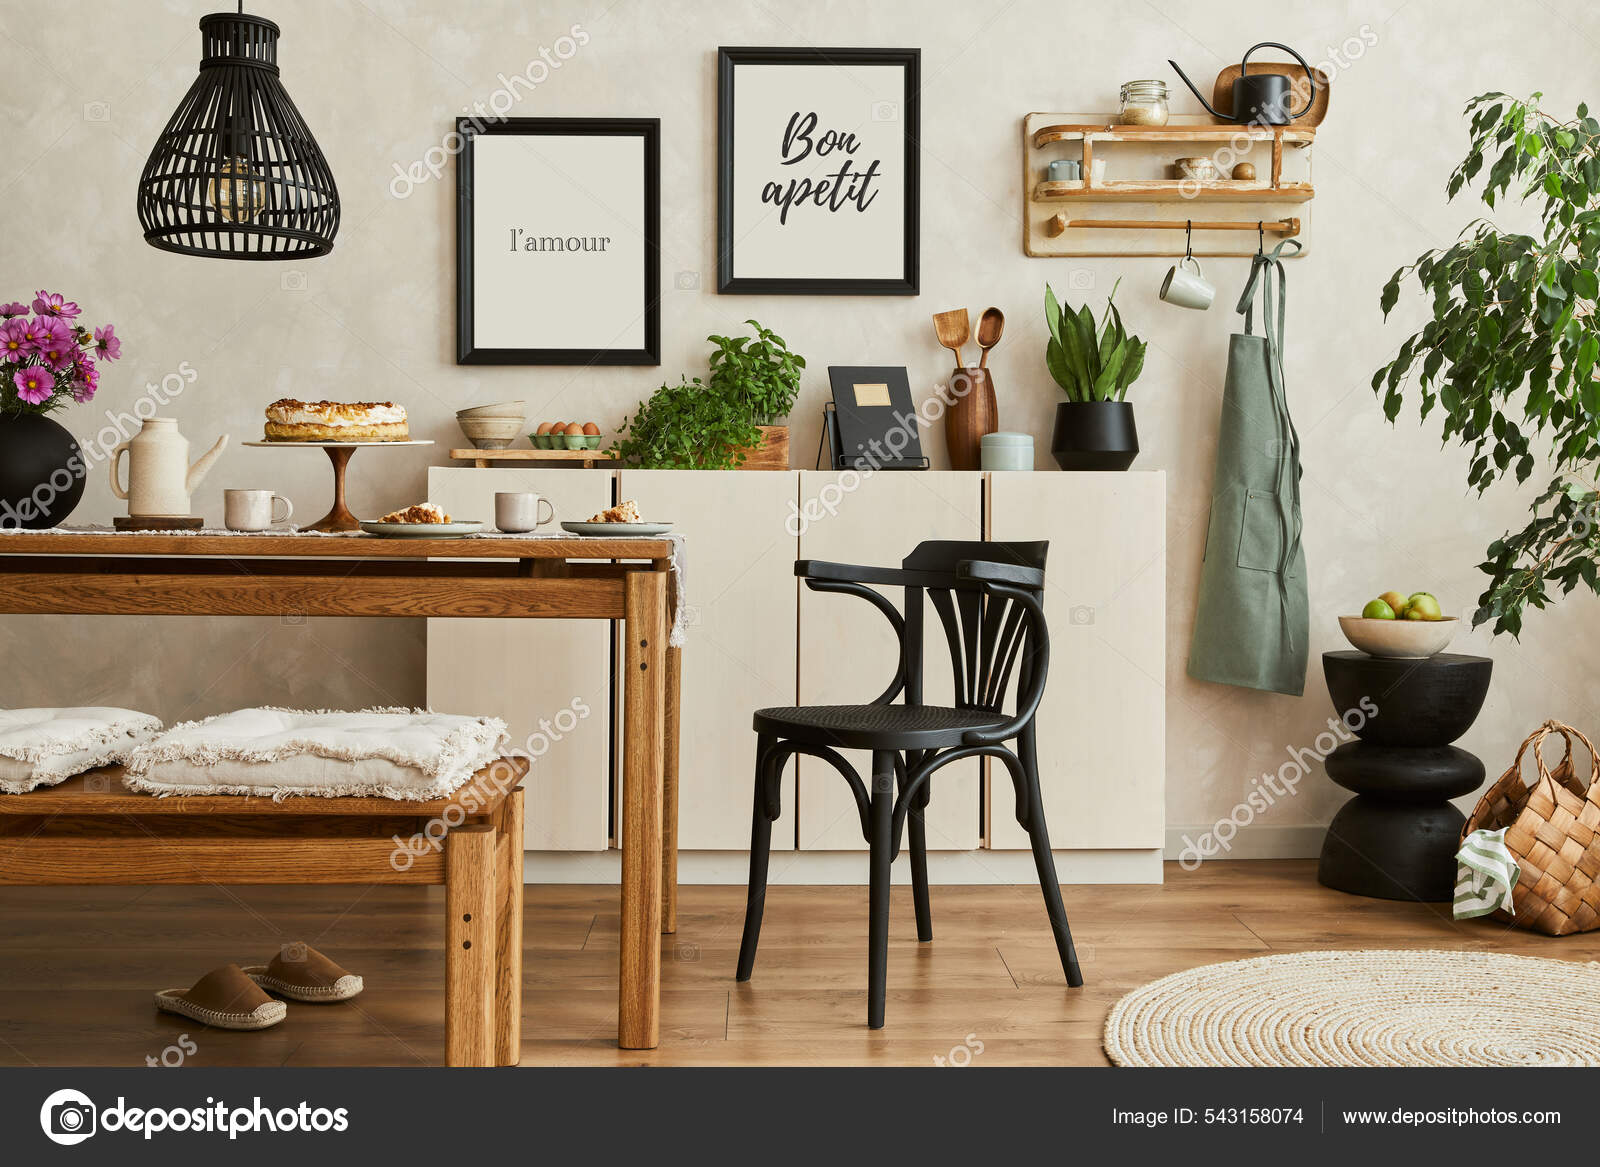 https://st.depositphotos.com/22220764/54315/i/1600/depositphotos_543158074-stock-photo-stylish-composition-cozy-kitchen-interior.jpg